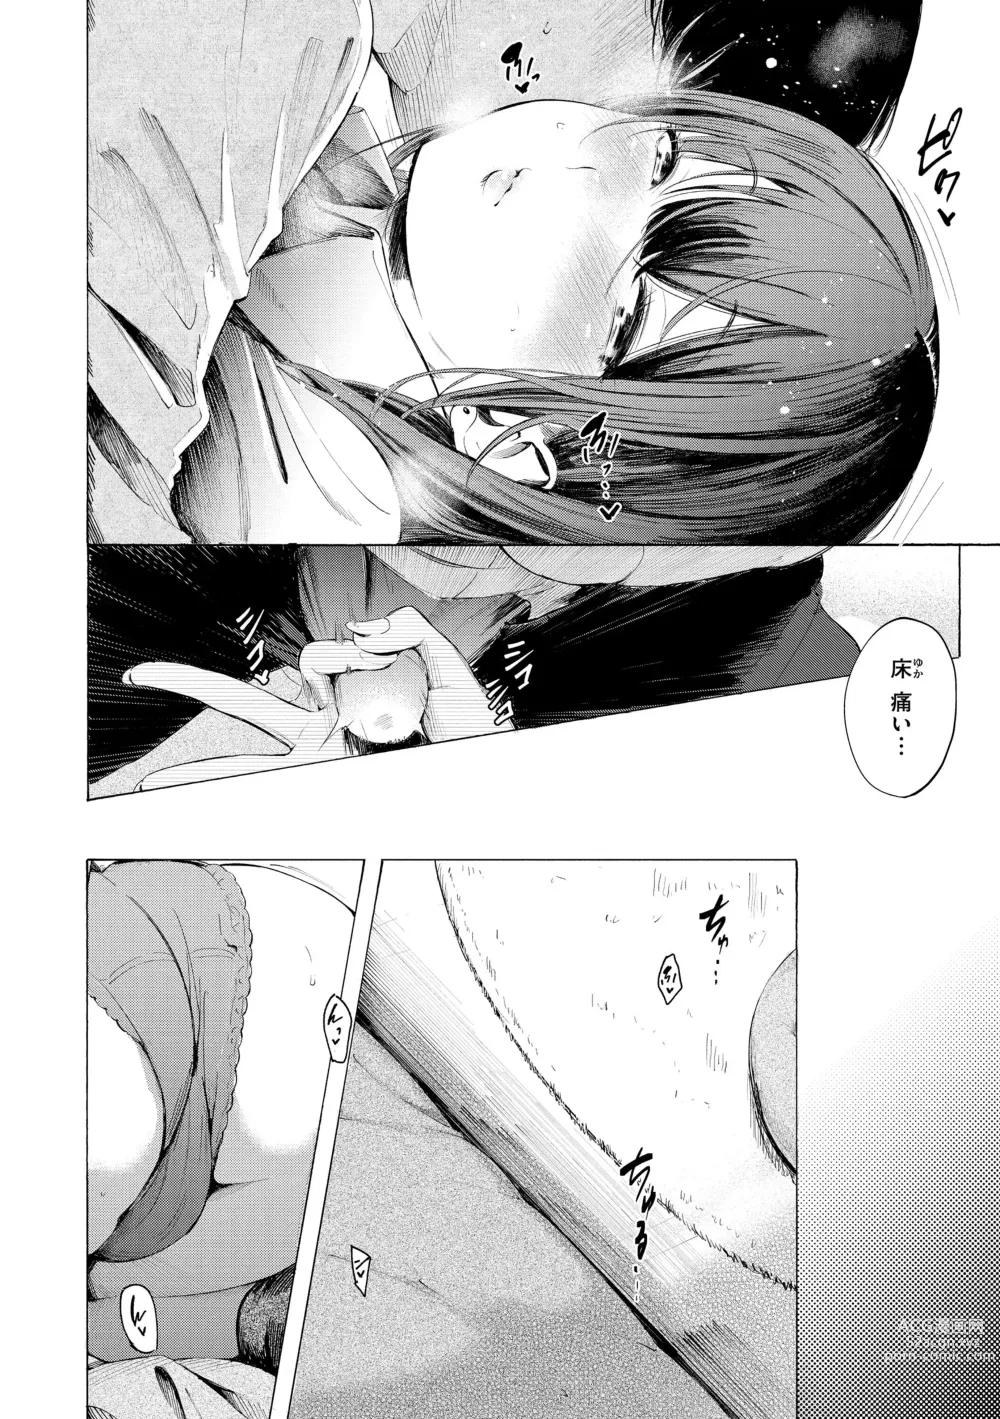 Page 178 of manga Frustration Girls - Mura Mura Girls ready for you!!